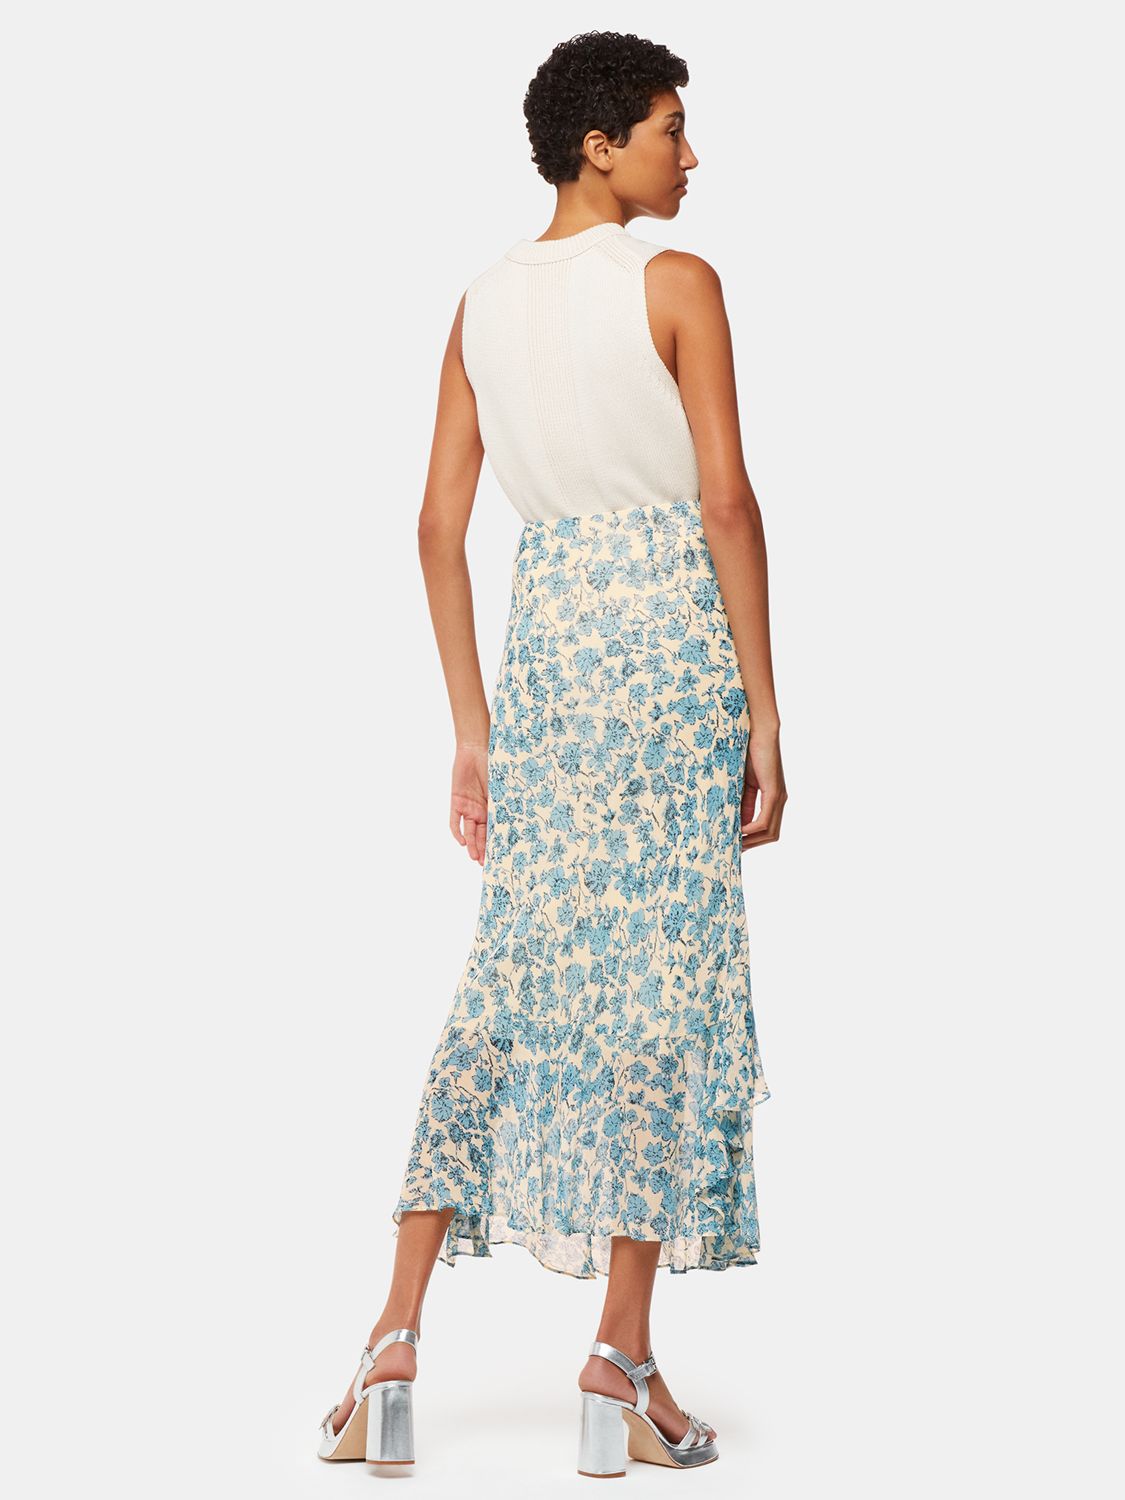 Whistles Shaded Floral Midi Skirt, Blue/Multi, 10